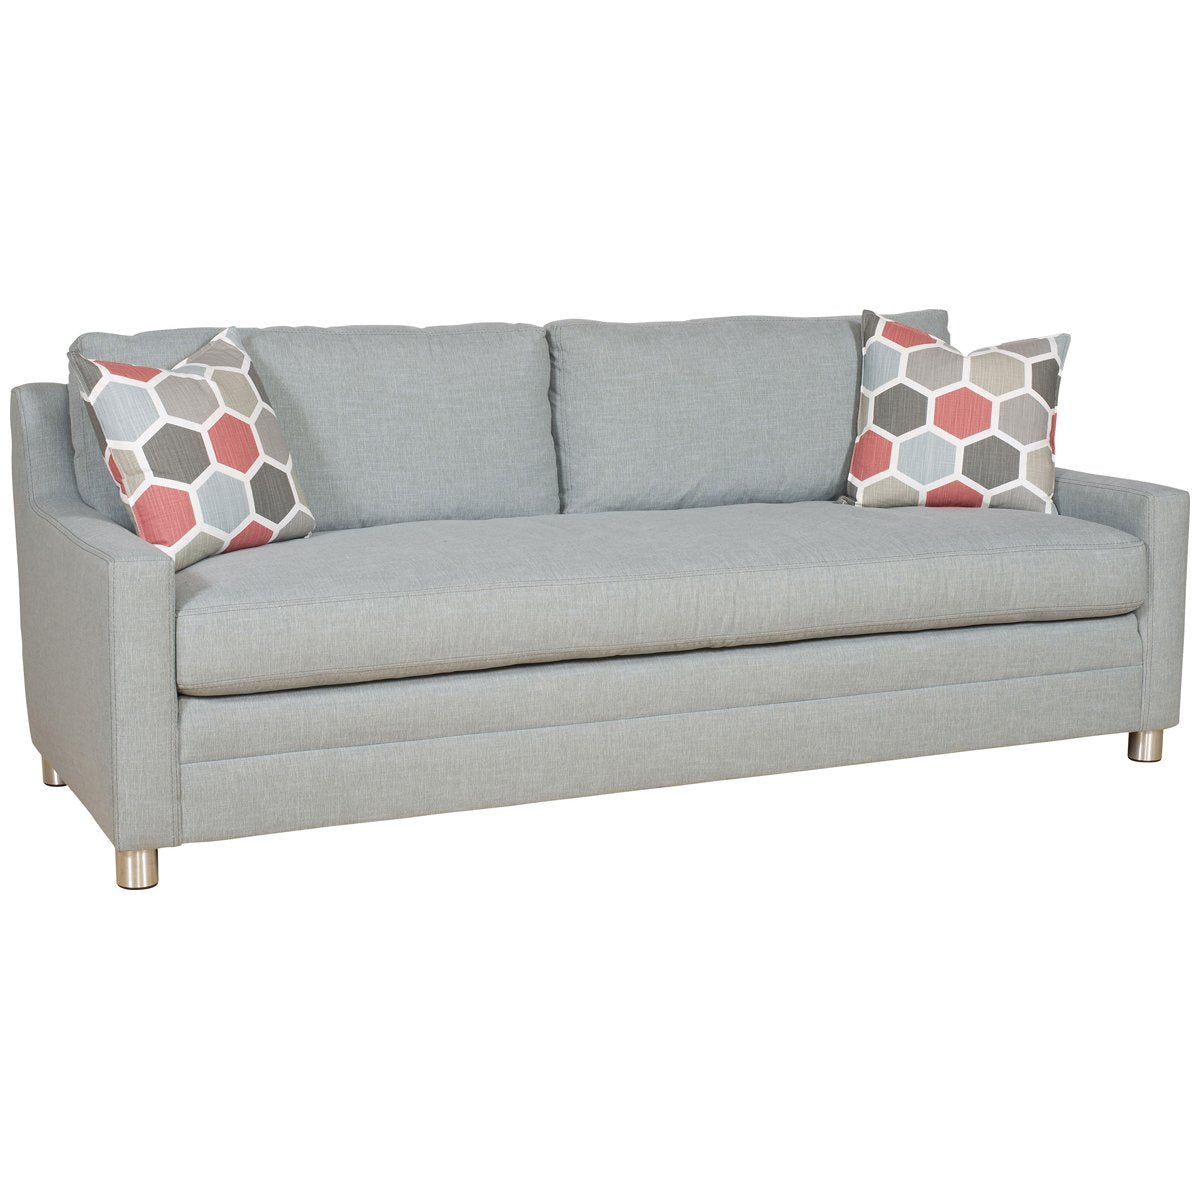 Vanguard Furniture Fairgrove Sofa